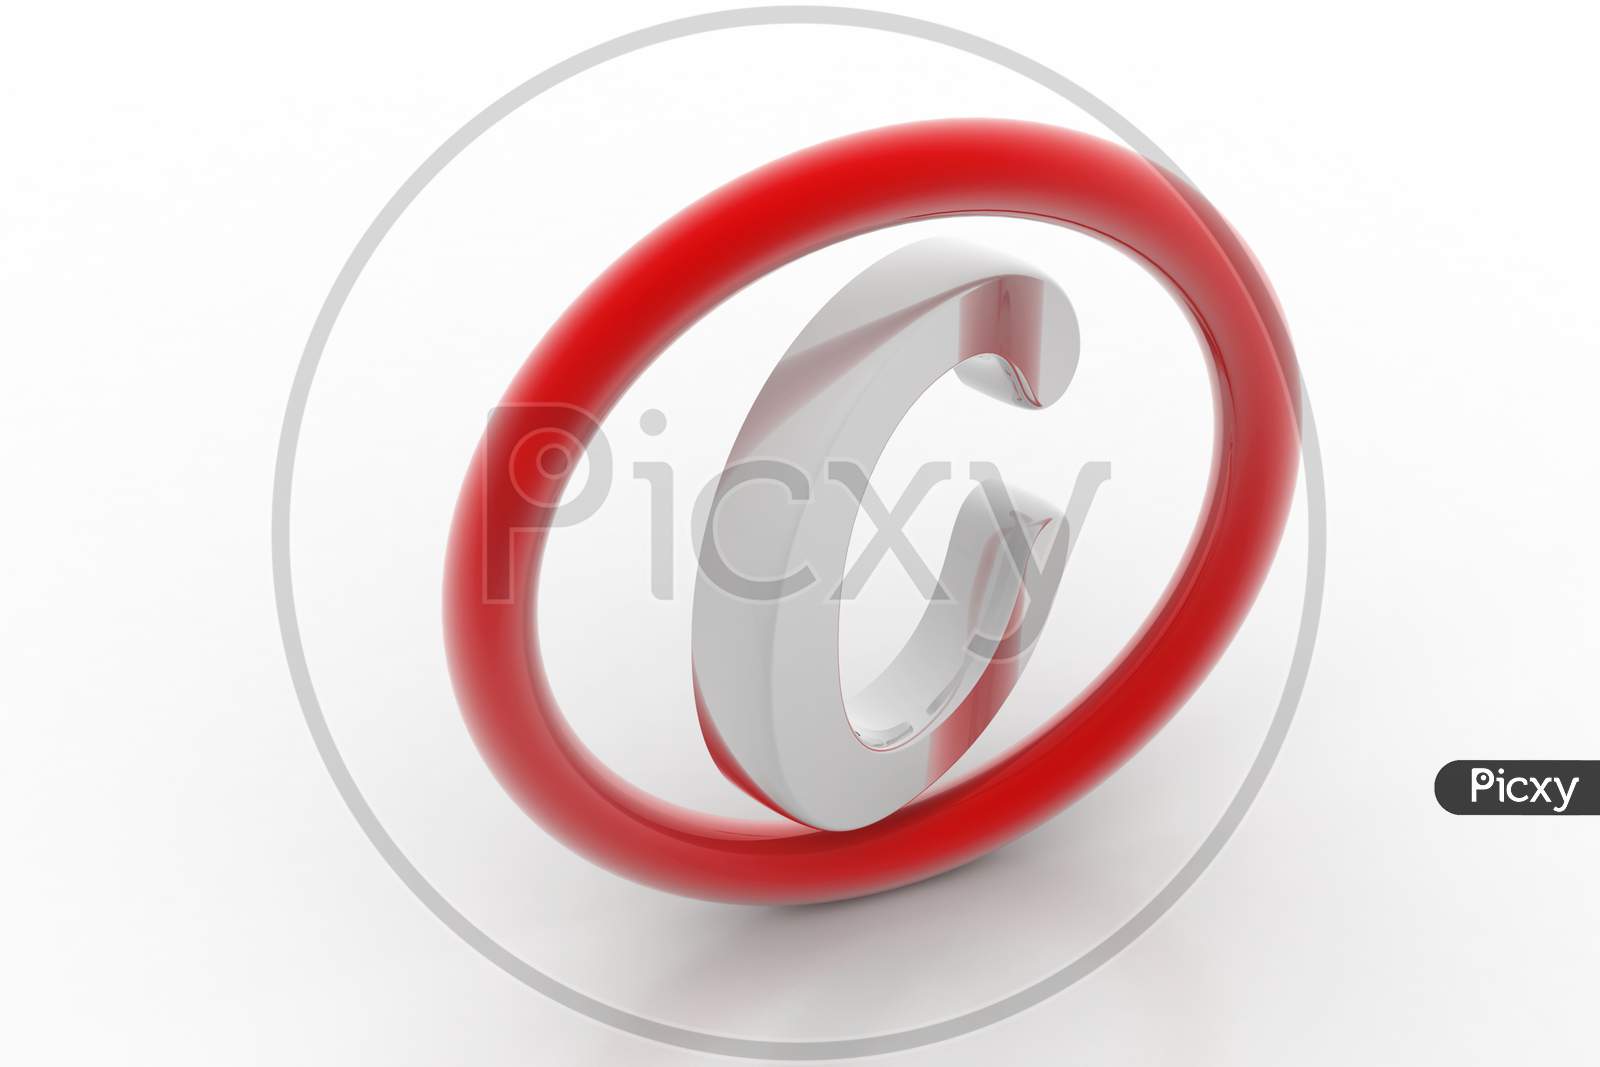 red copyright symbol